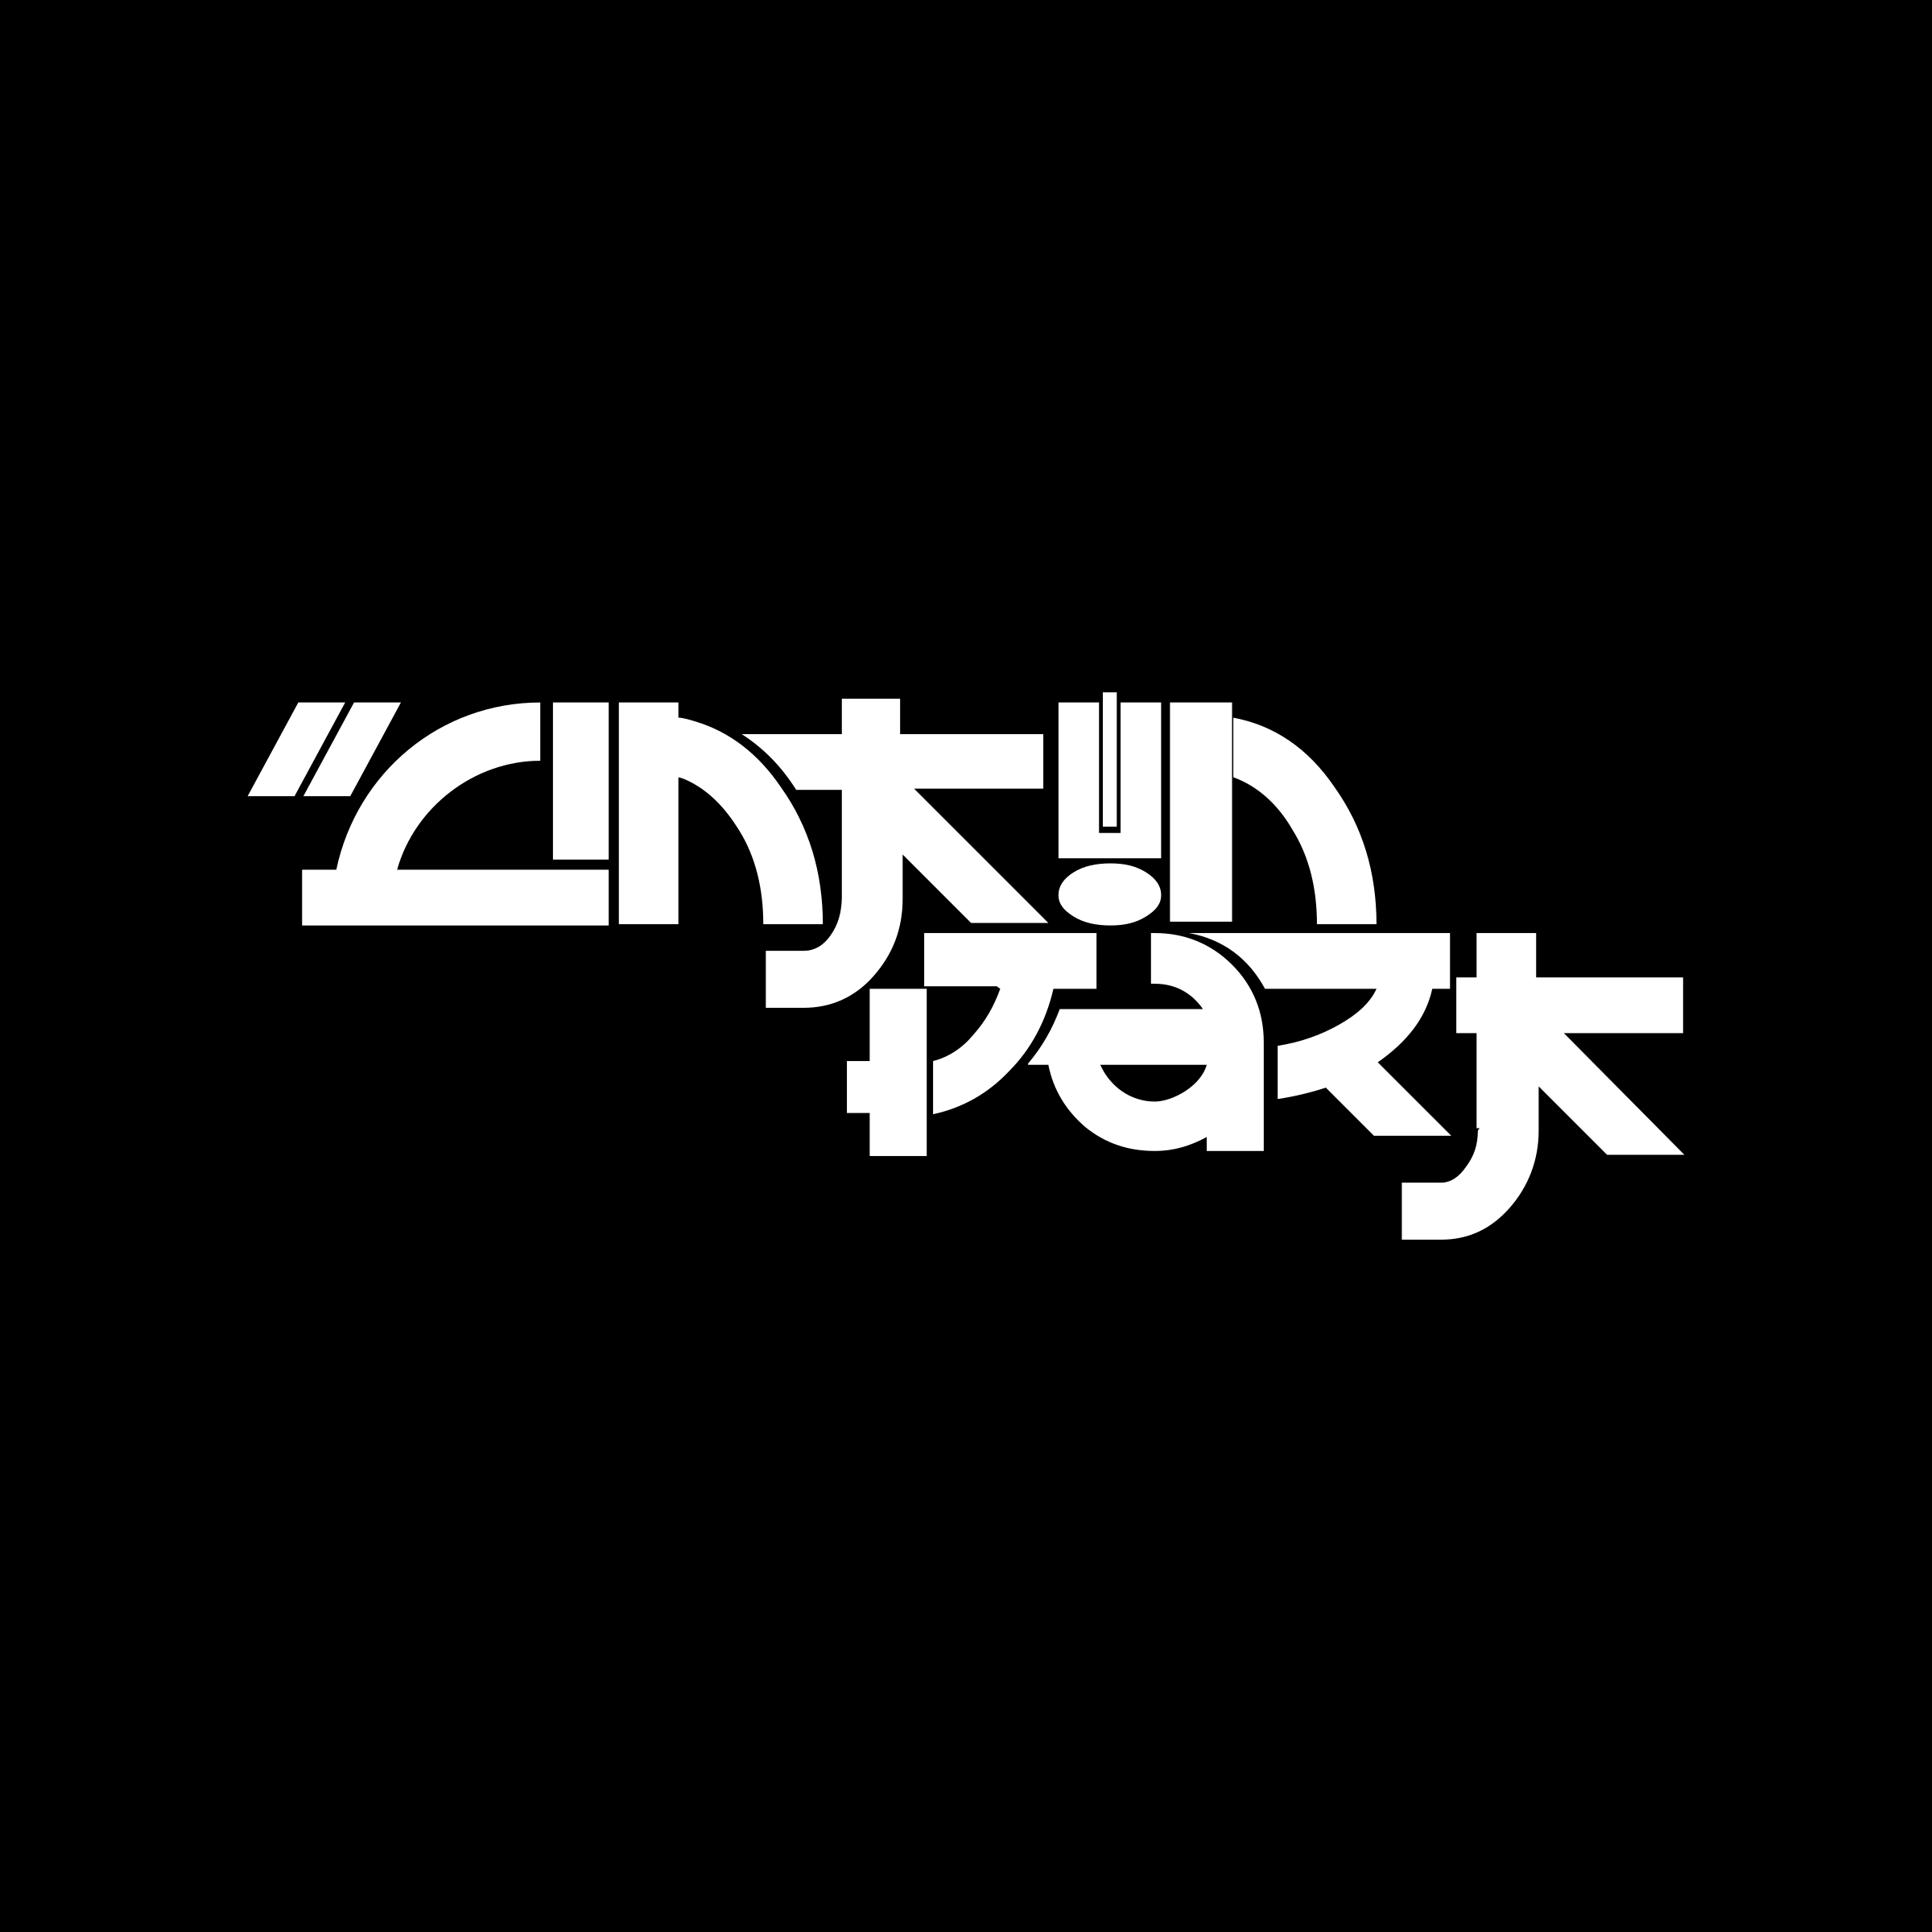 Linkin Park Logo - Linkin Park Logo PNG Transparent & SVG Vector - Freebie Supply